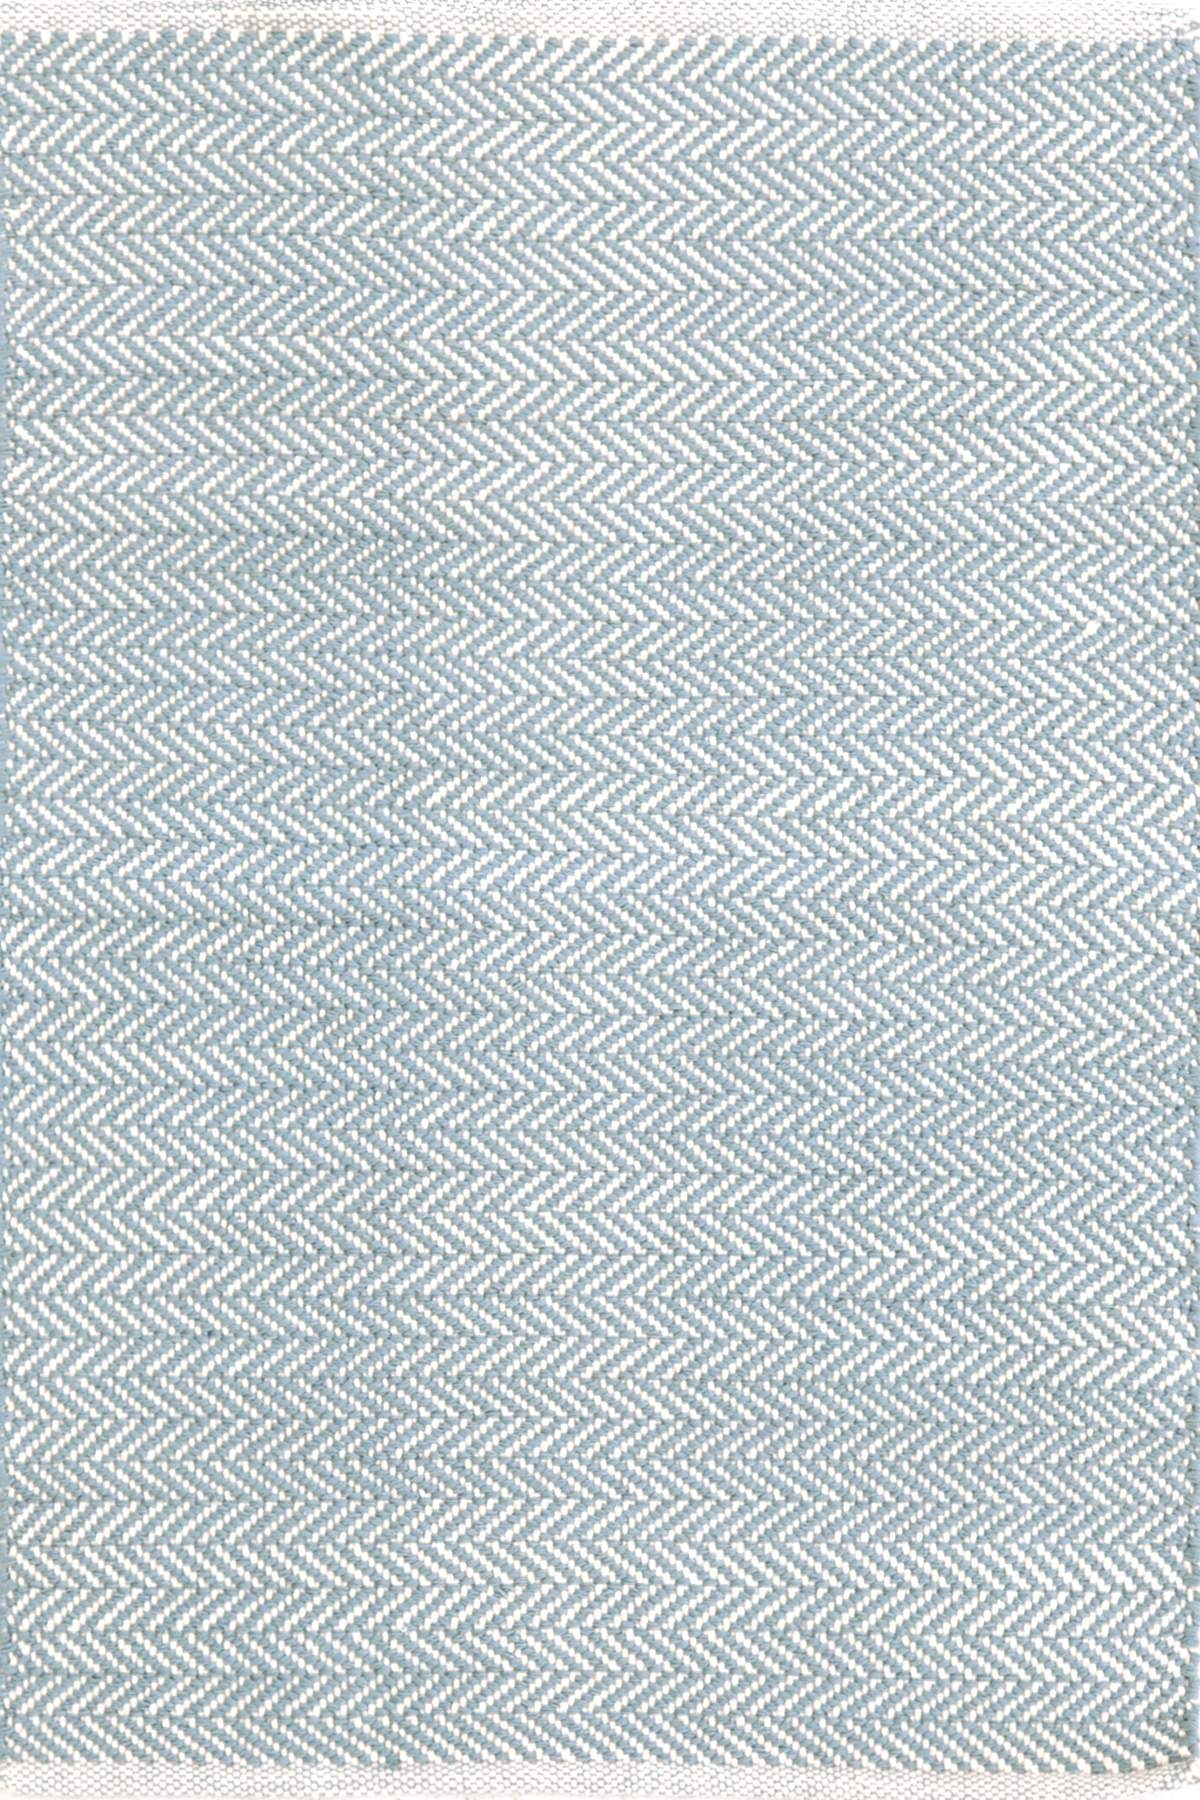 HERRINGBONE SWEDISH BLUE WOVEN COTTON RUG-4 x 6 - Image 0